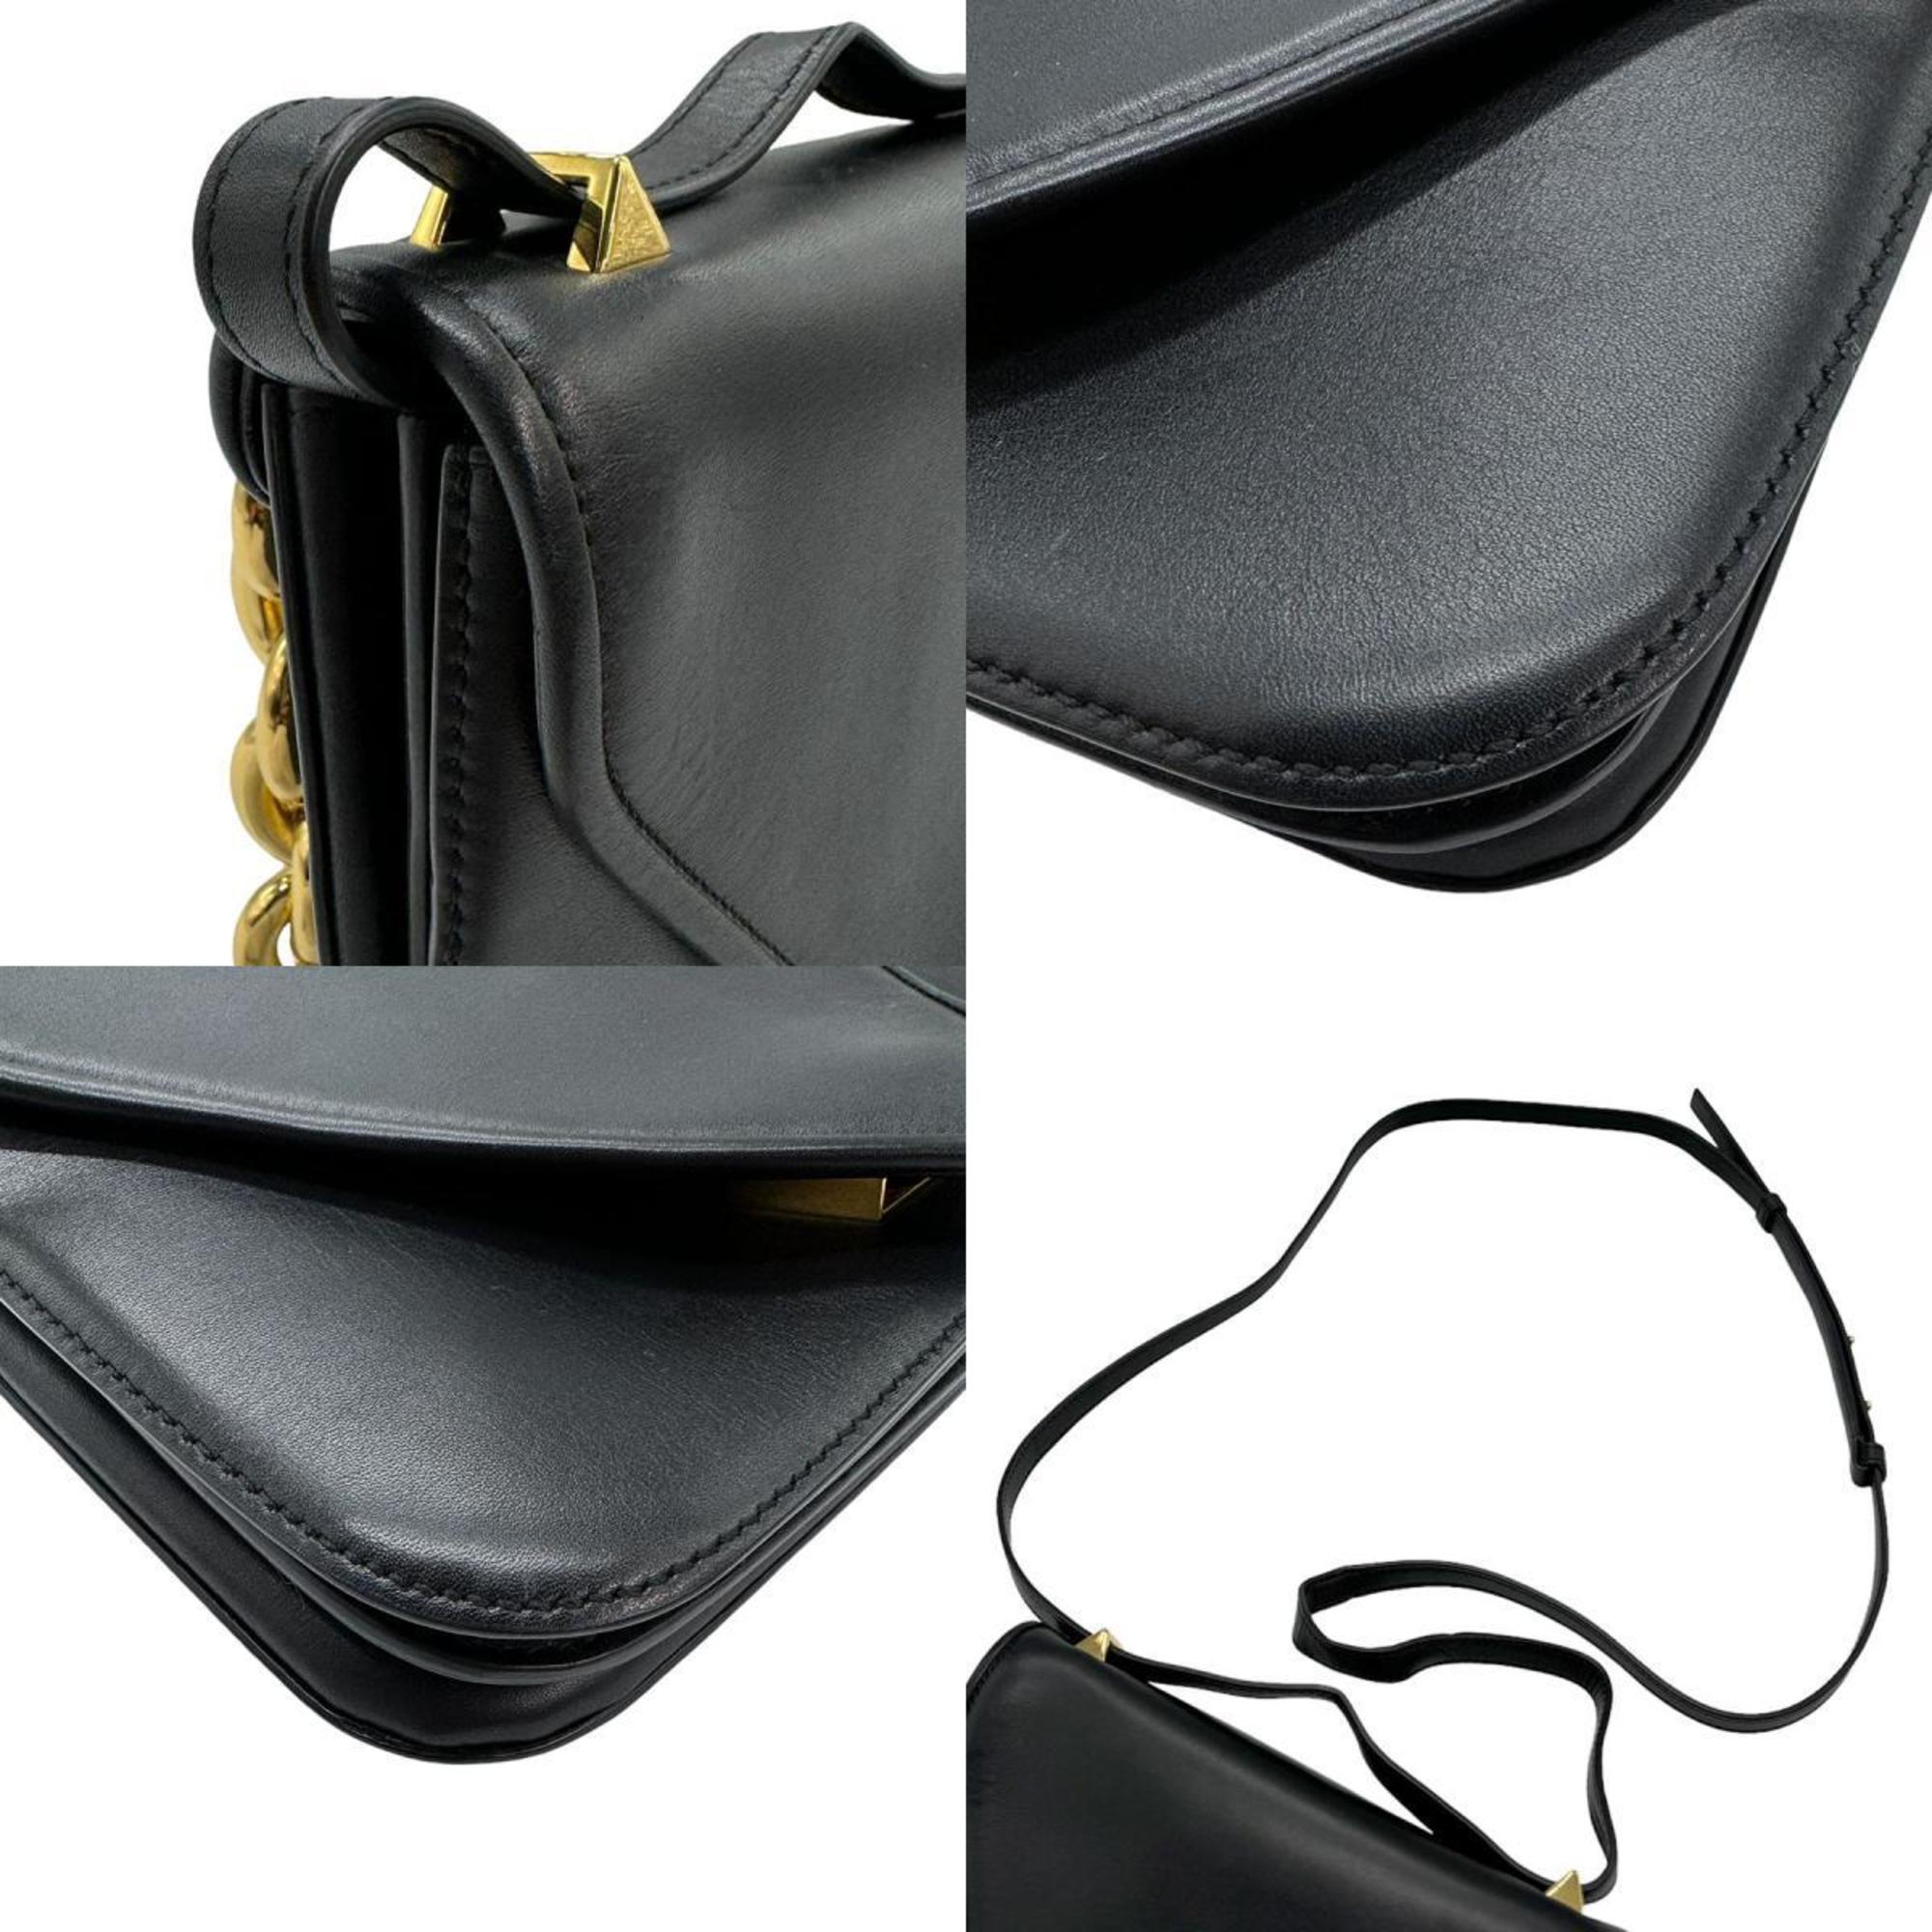 BOTTEGA VENETA Shoulder Bag Mount Envelope Leather Black Women's z0904